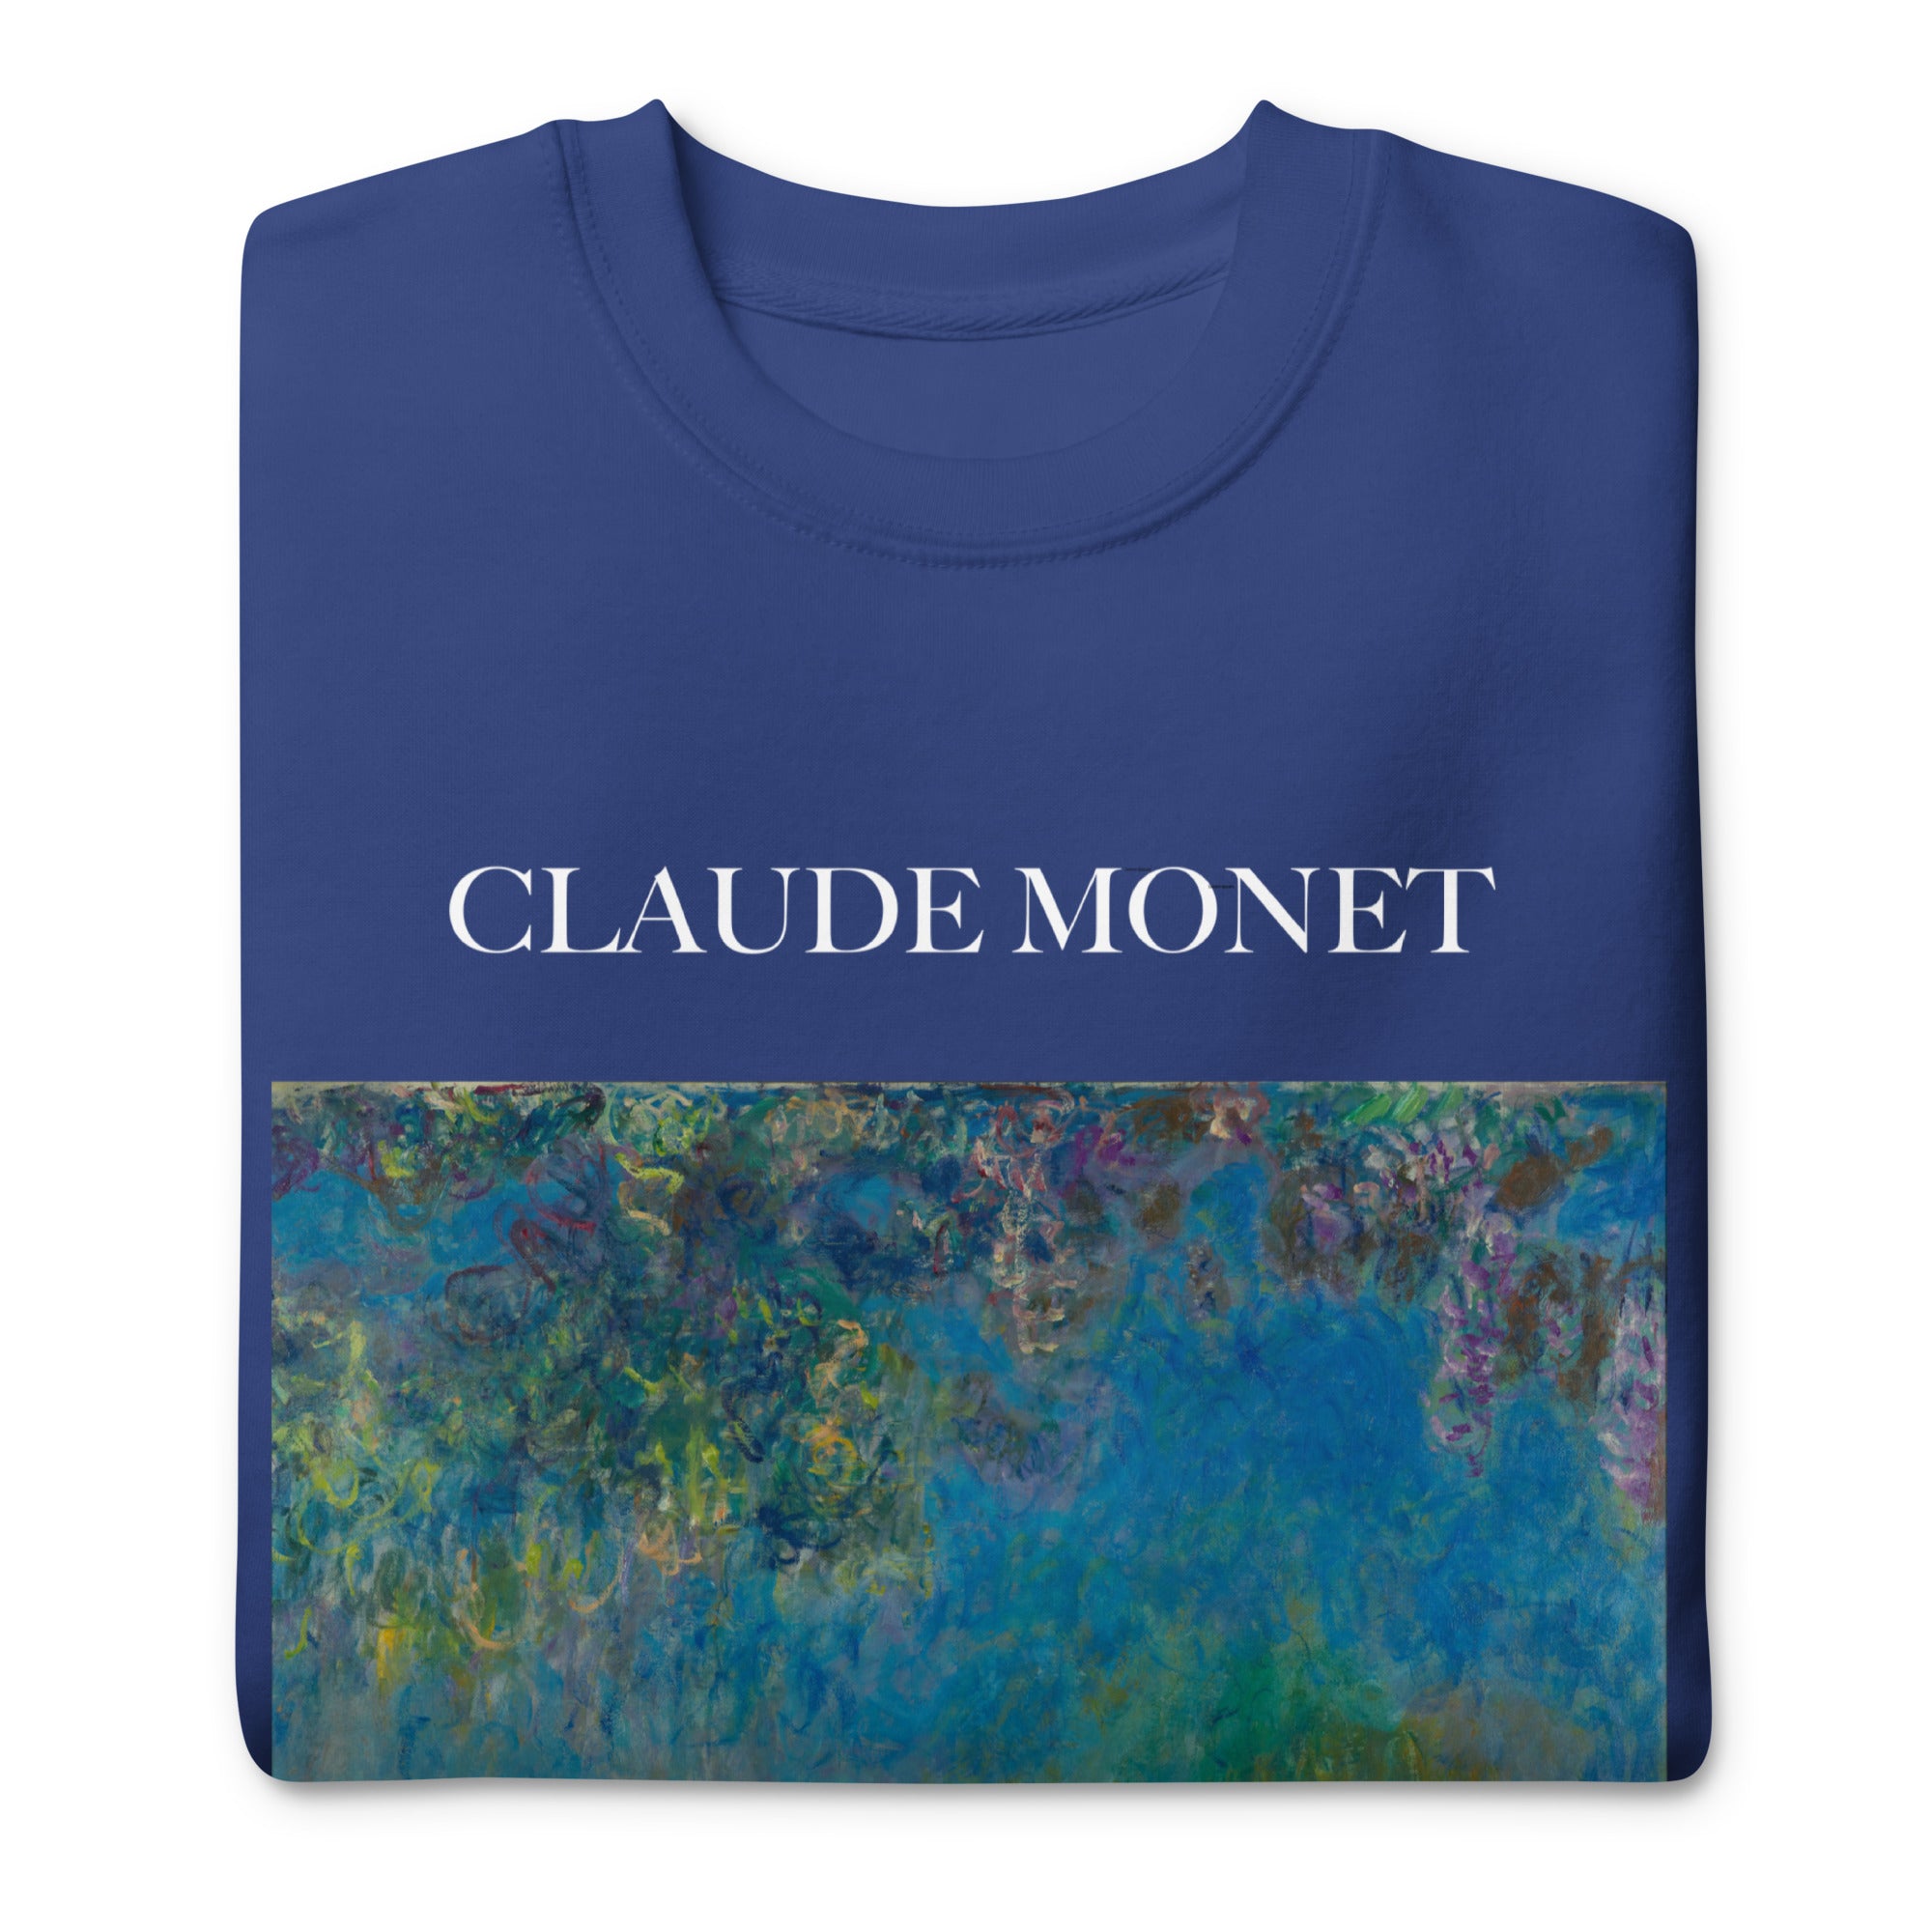 Claude Monet 'Wisteria' Famous Painting Sweatshirt | Unisex Premium Sweatshirt